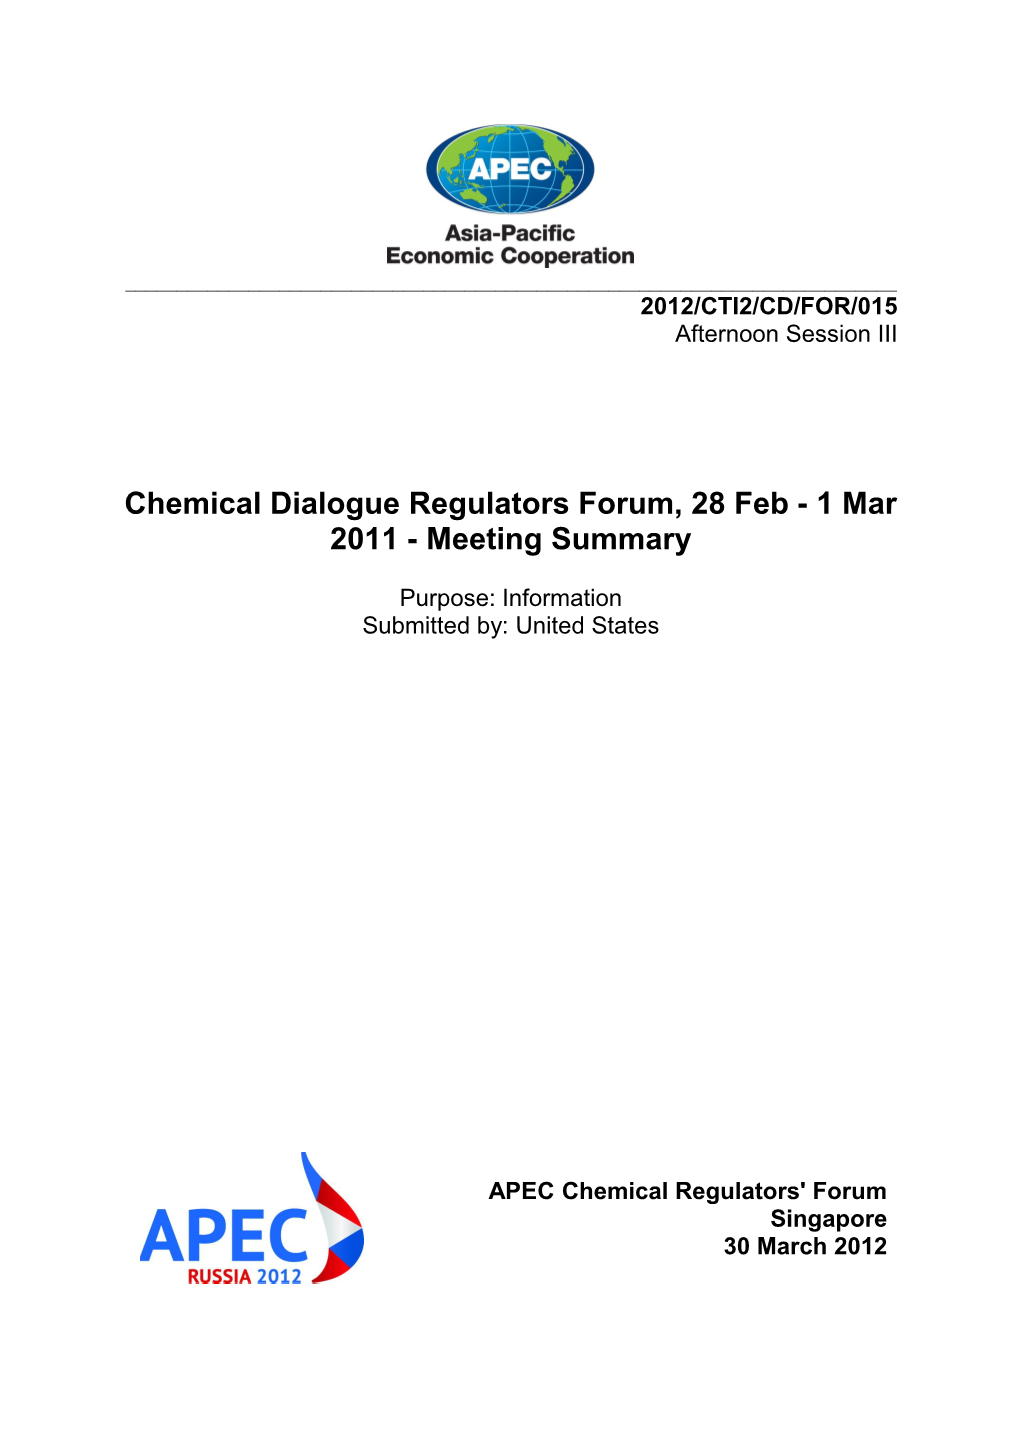 Chemical Dialogue Regulators Forum, 28 Feb- 1 Mar 2011 - Meeting Summary